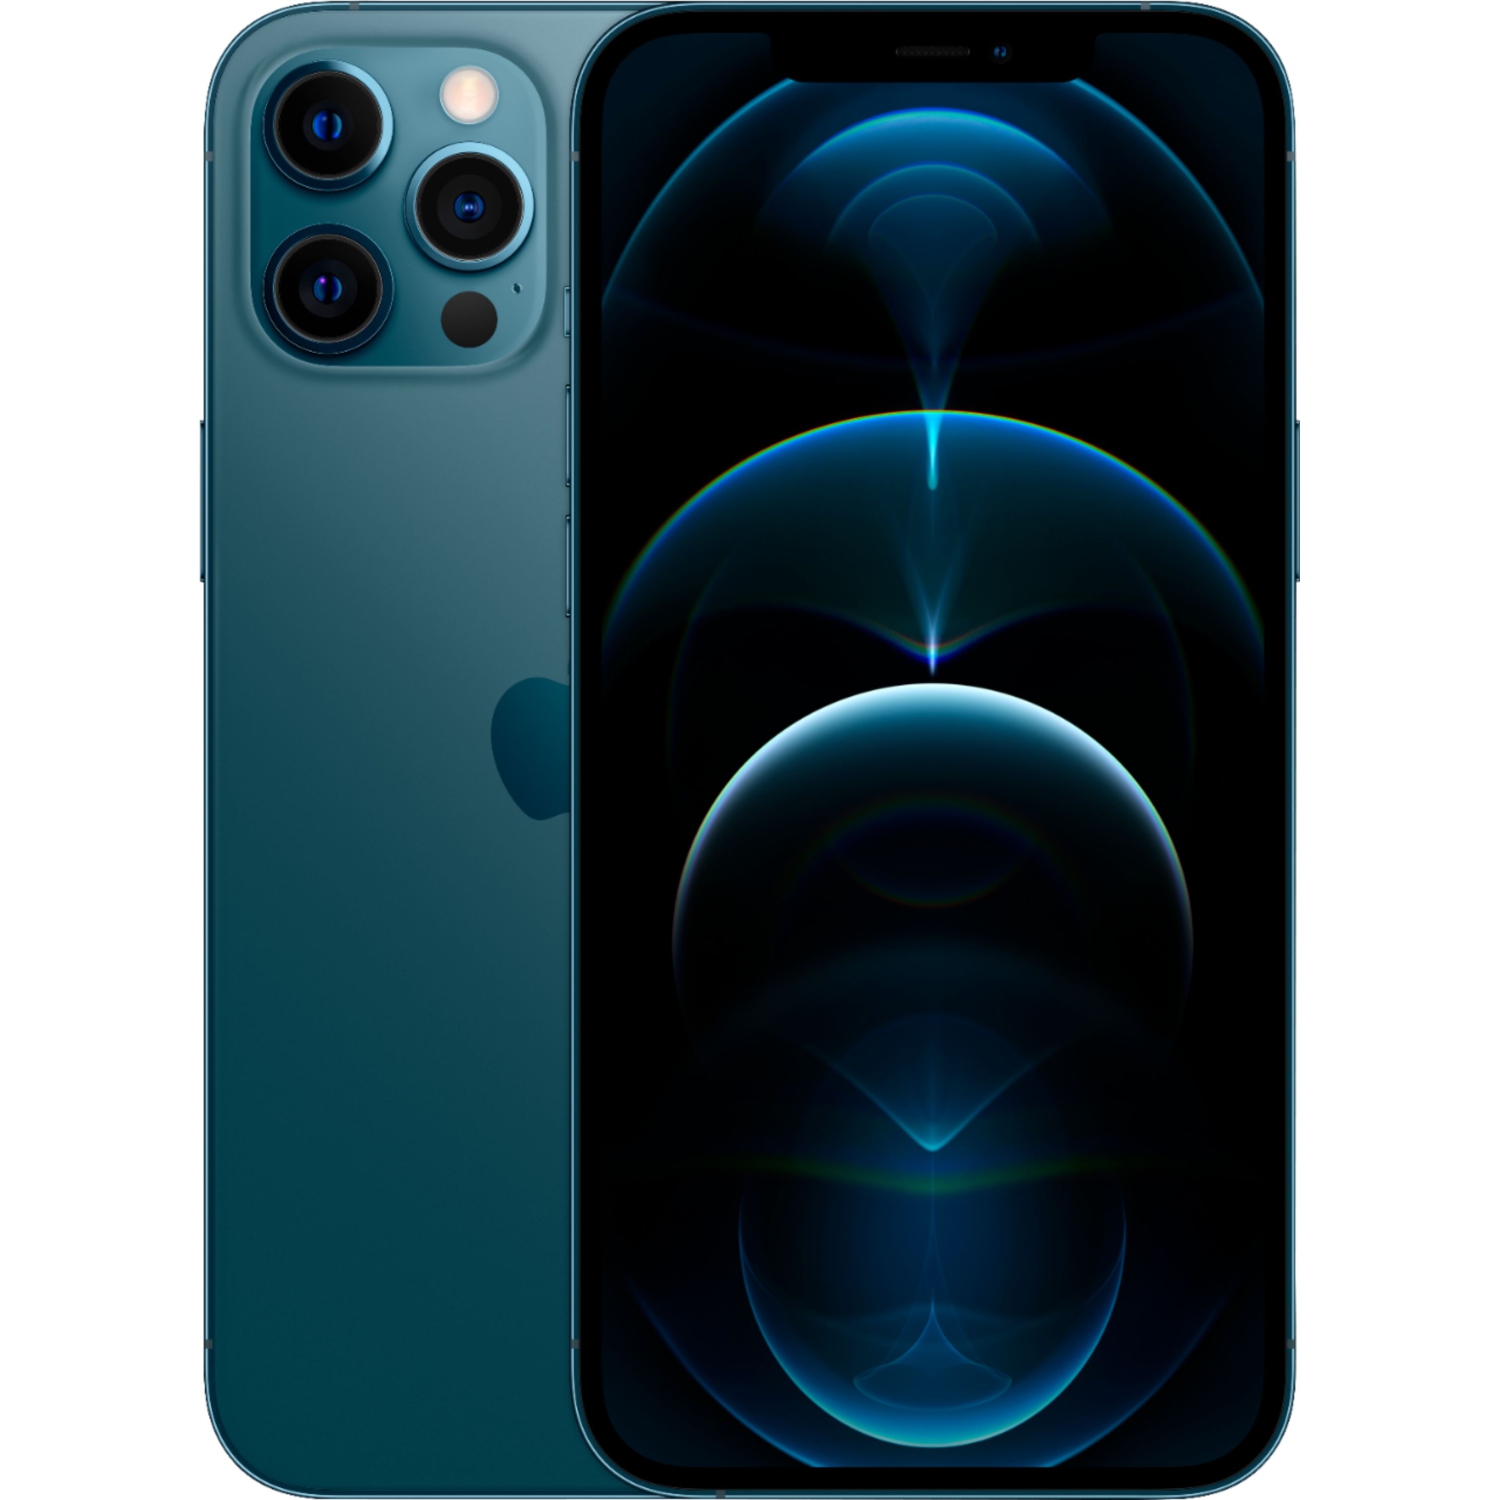 Apple Iphone 12 Pro Max 128GB - Pacific Blue - Unlocked - Open Box